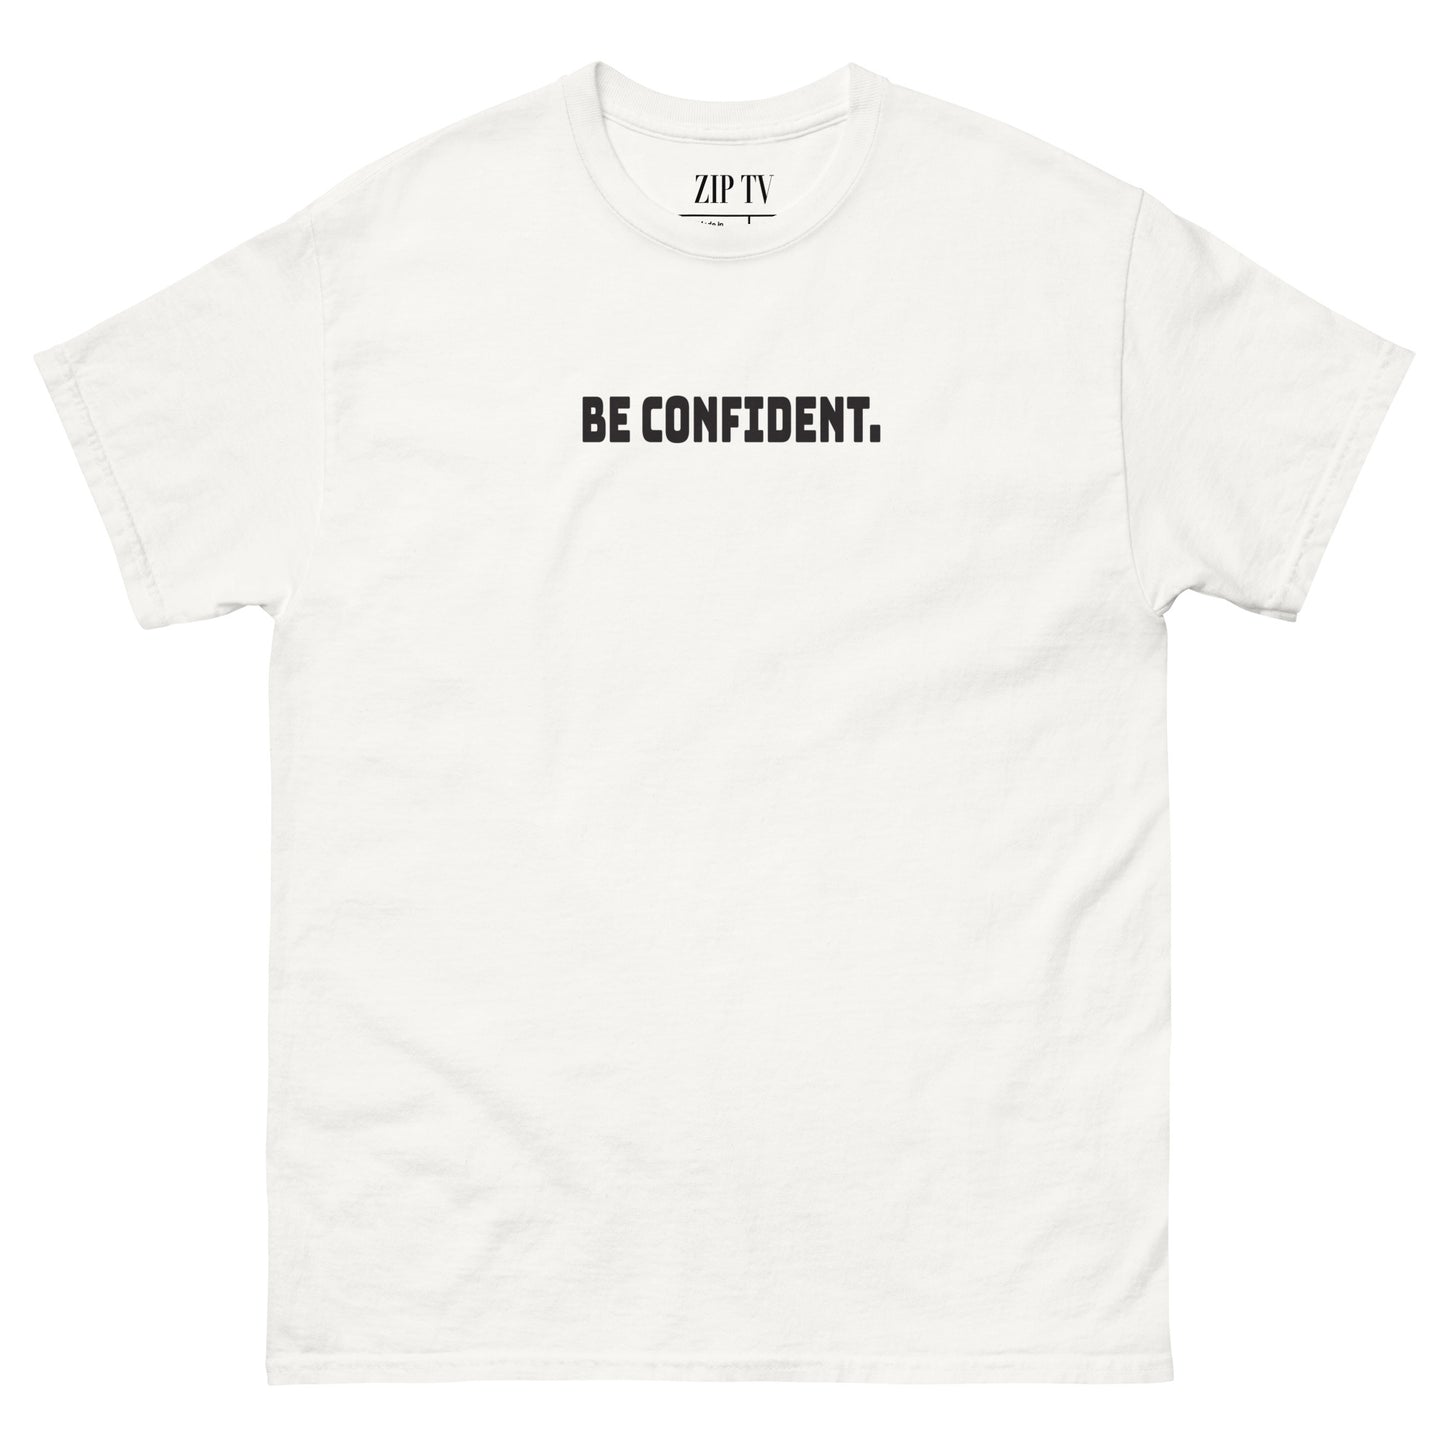 "Be Confident." Black Lettering